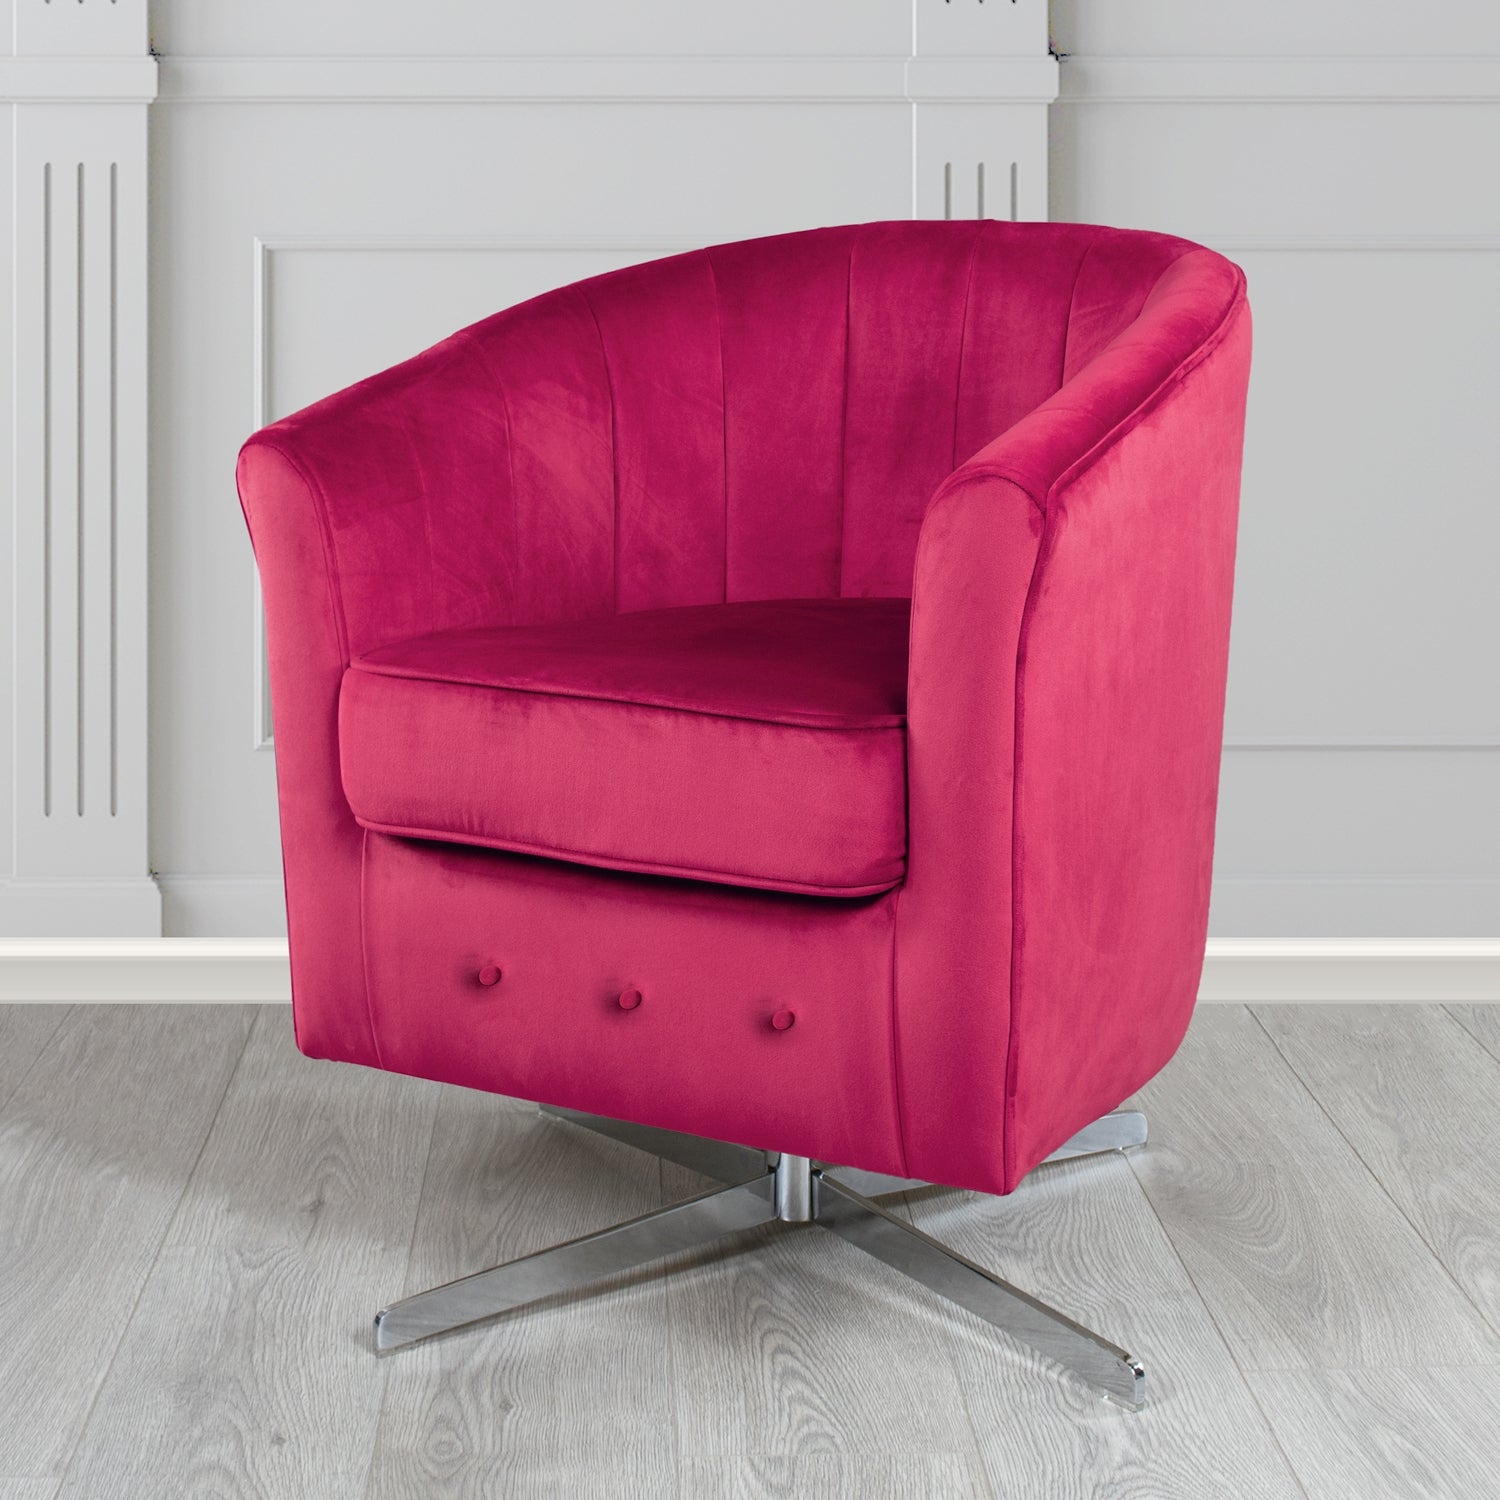 Doha Monaco Boysenberry Plain Velvet Fabric Swivel Tub Chair - The Tub Chair Shop